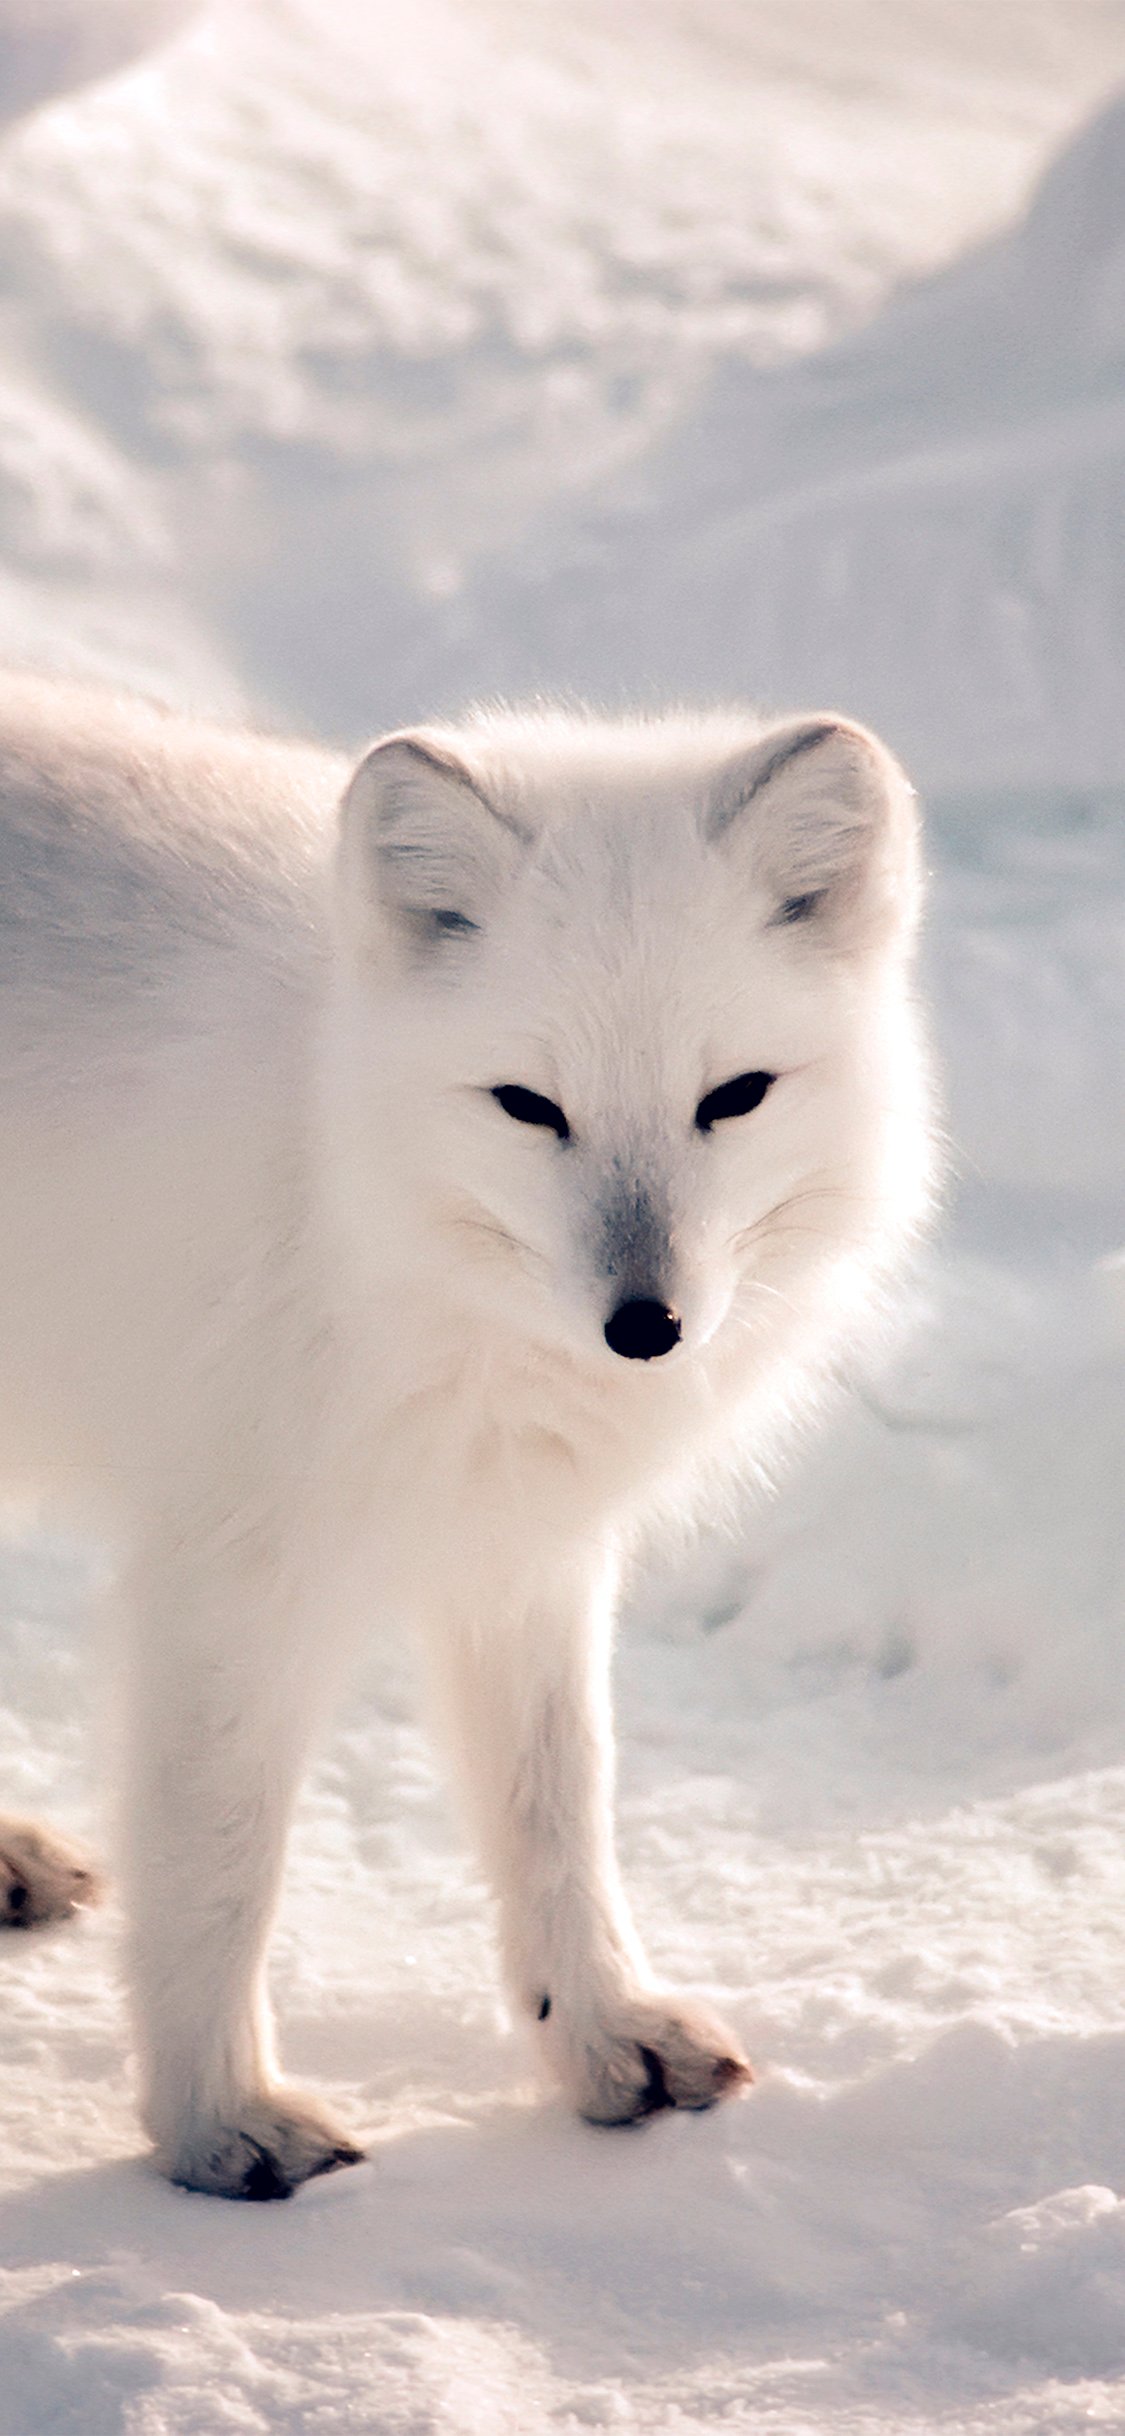 White fox iPhone X Wallpaper Free Download